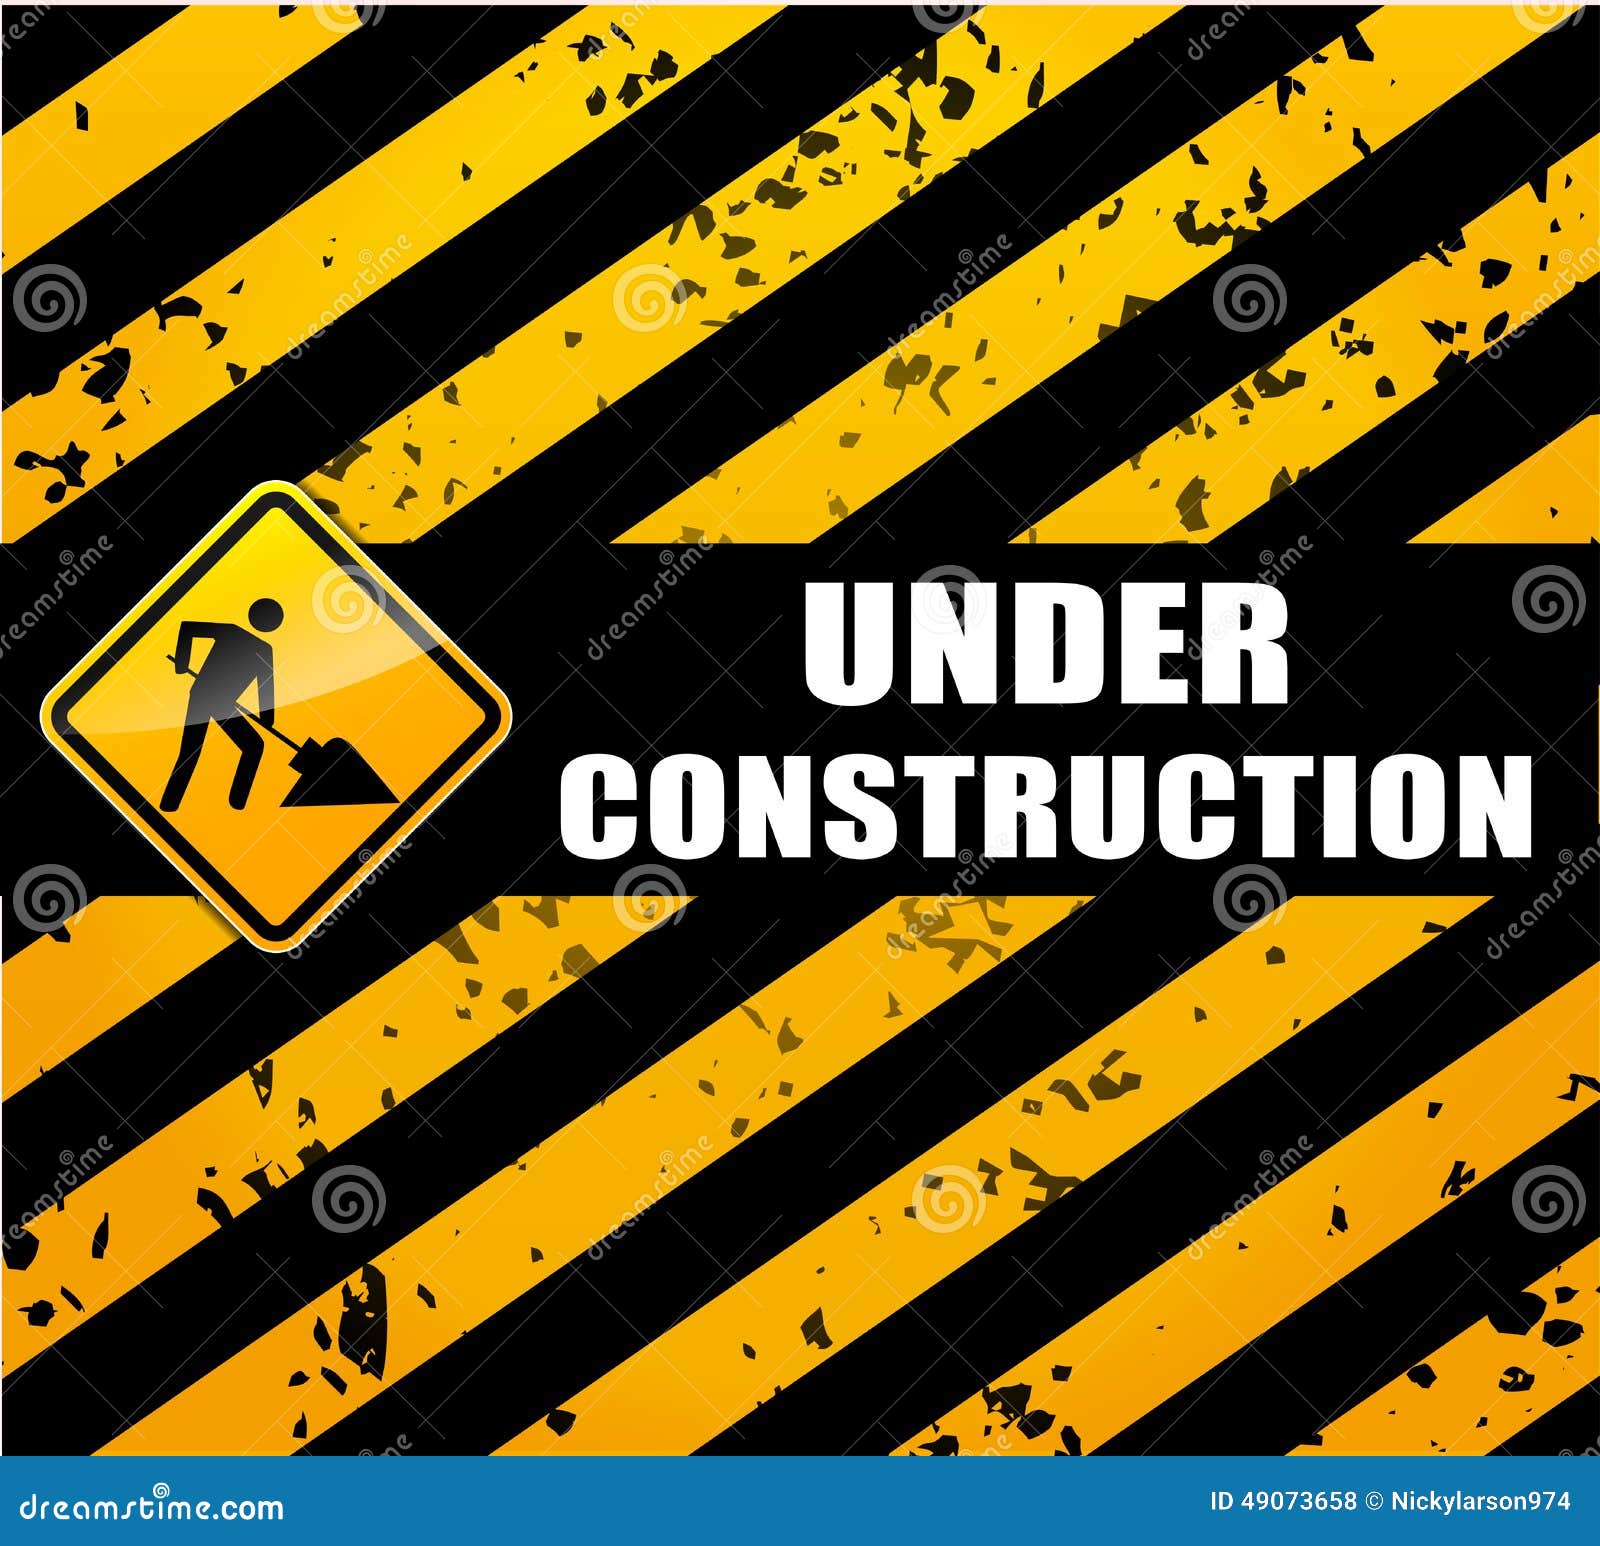 Under Construction Background Stock Vector - Illustration of ...